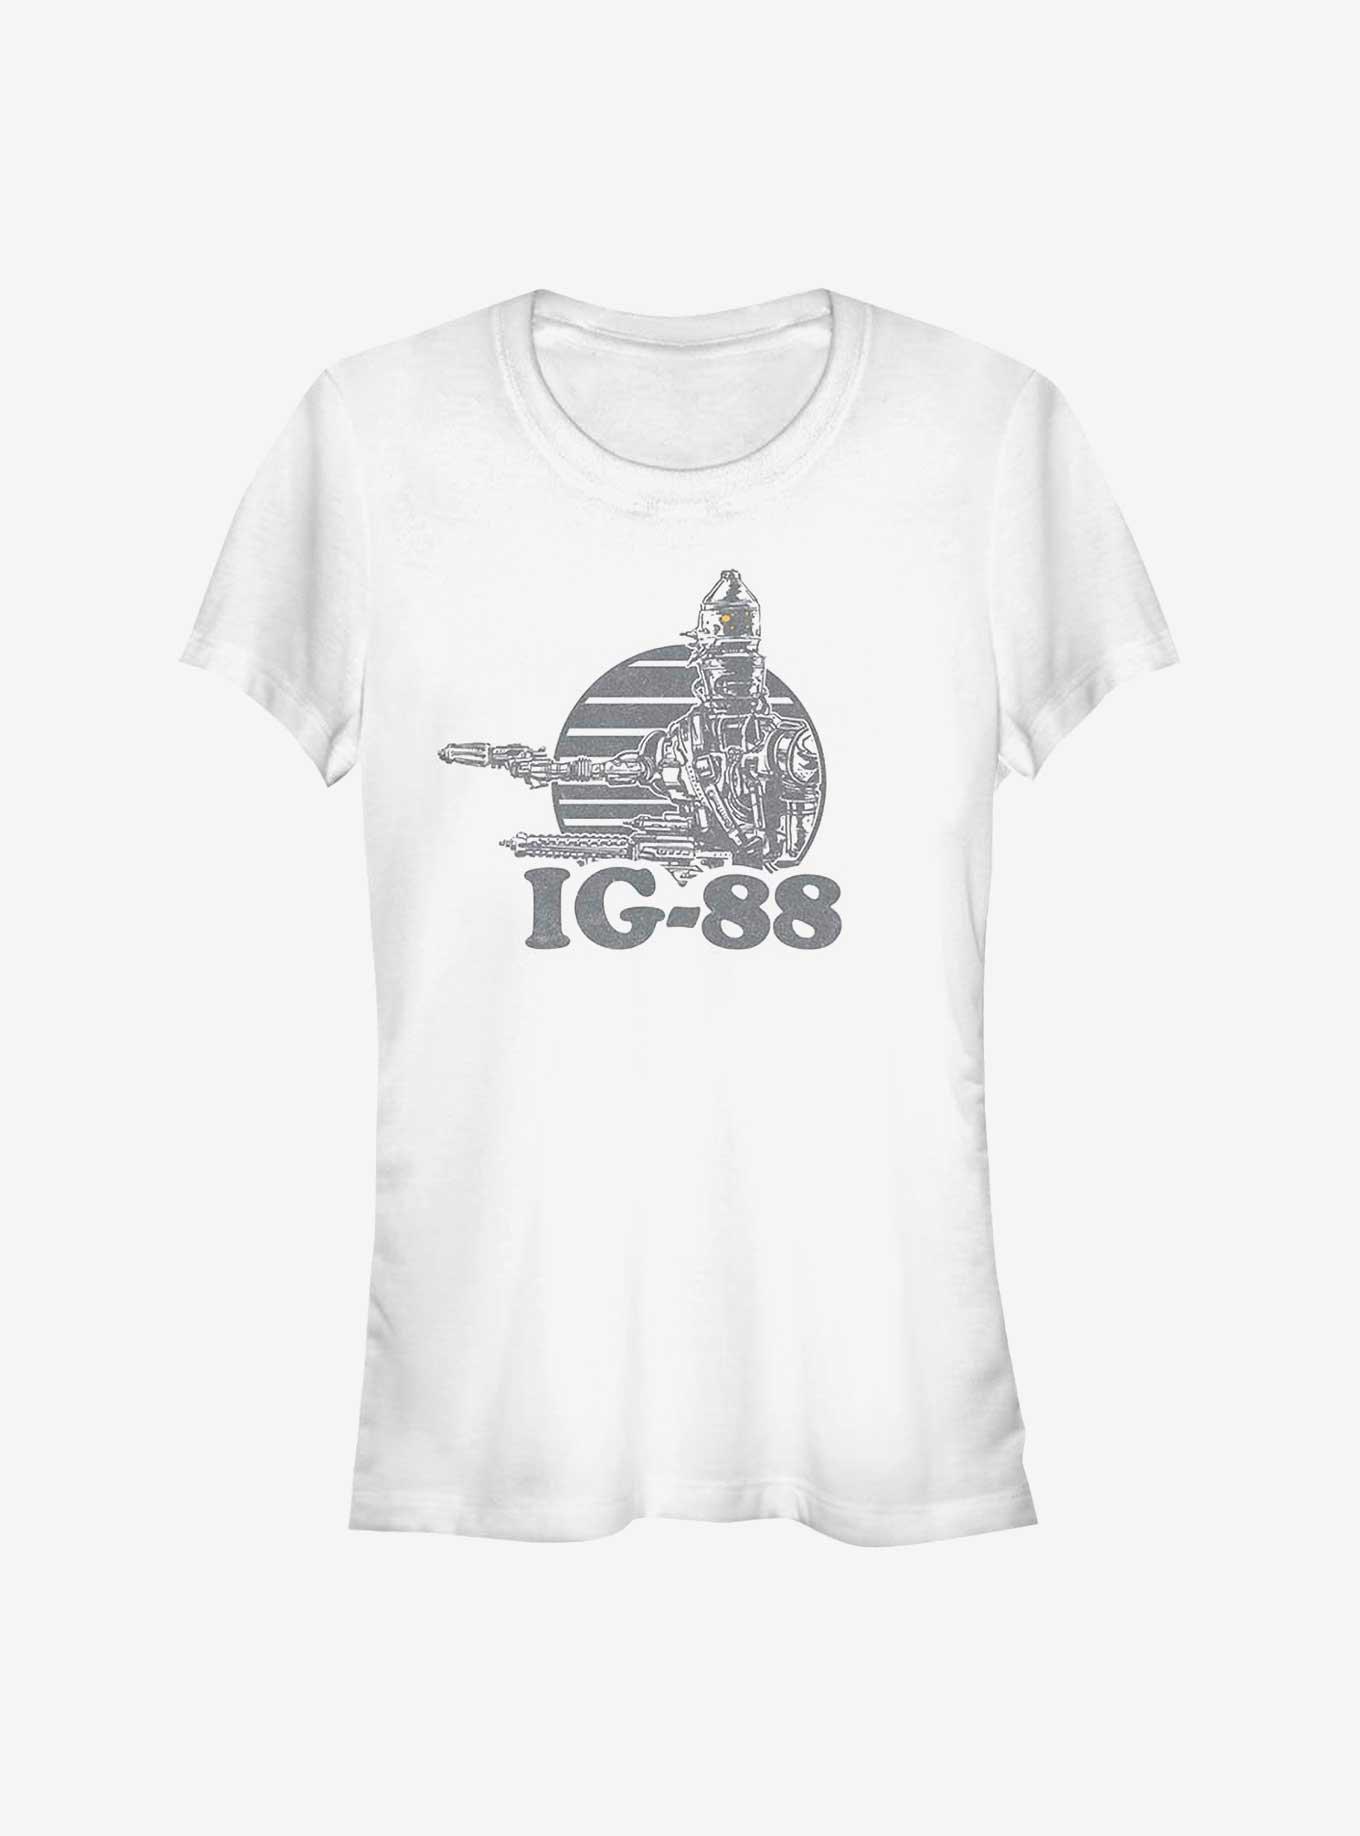 Star Wars IG-88 Girls T-Shirt